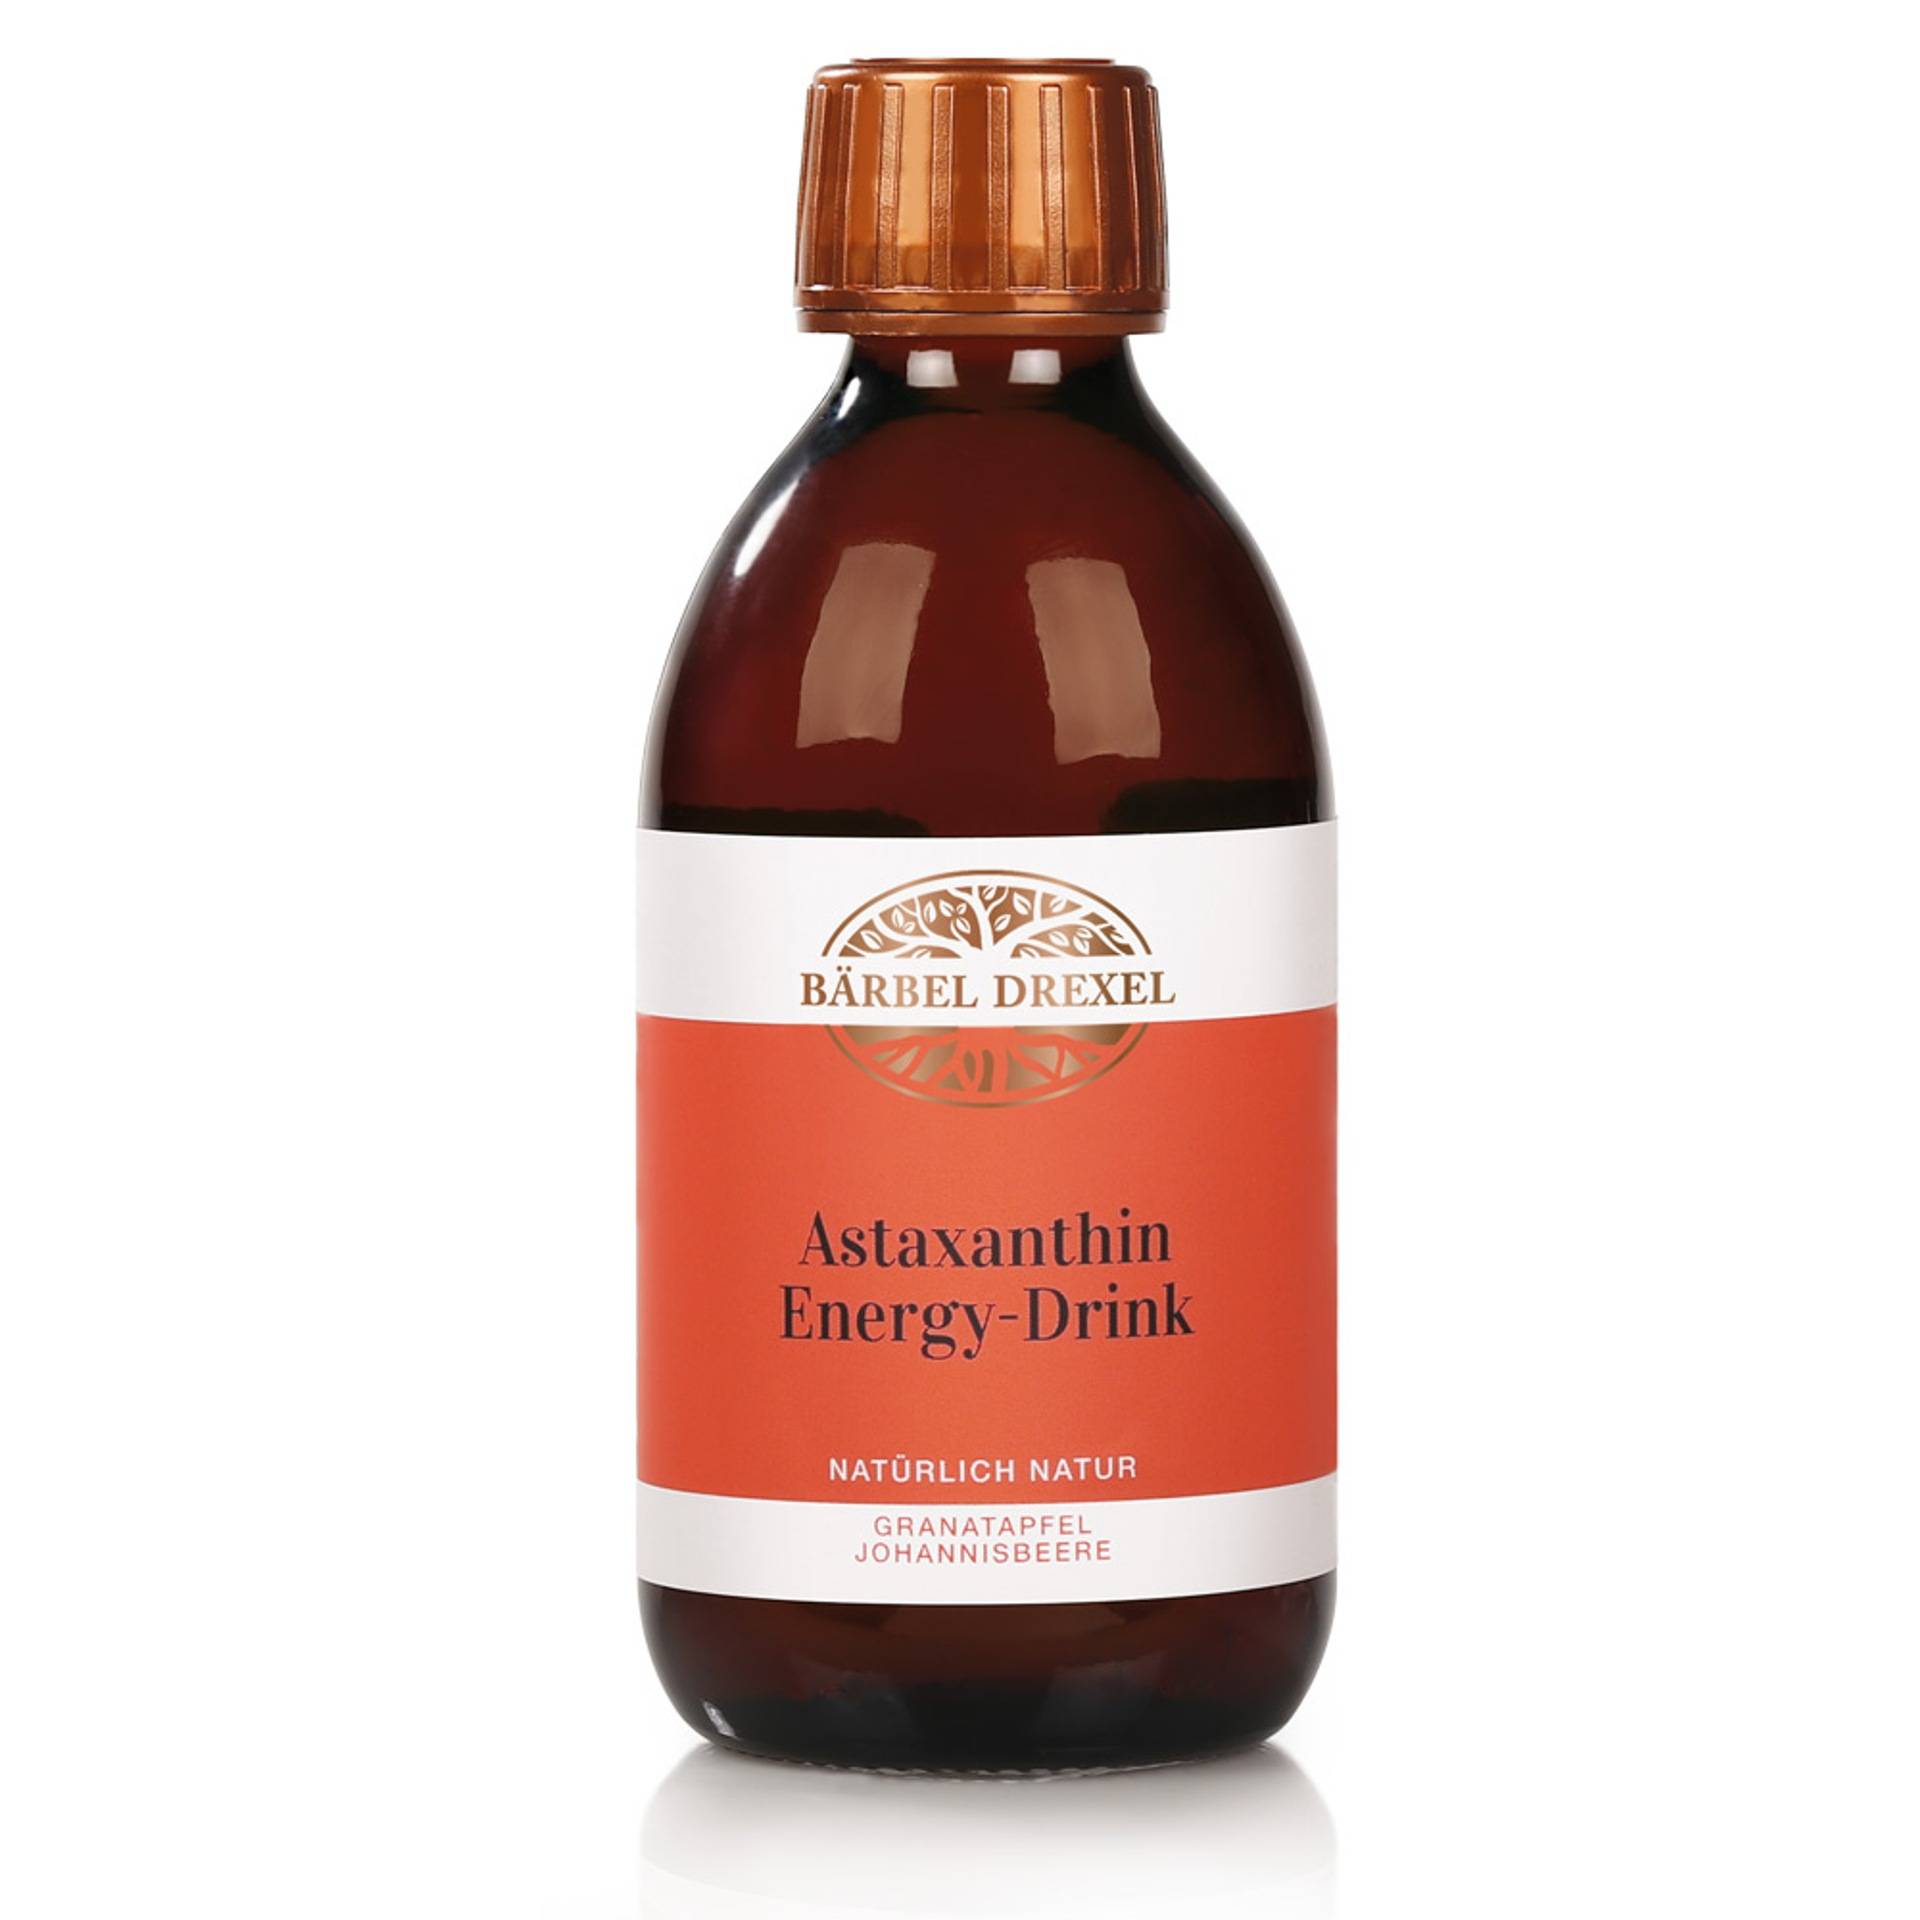 astaxanthin-energy-drink-granatapfel-johannisbeere-69016_16.jpg